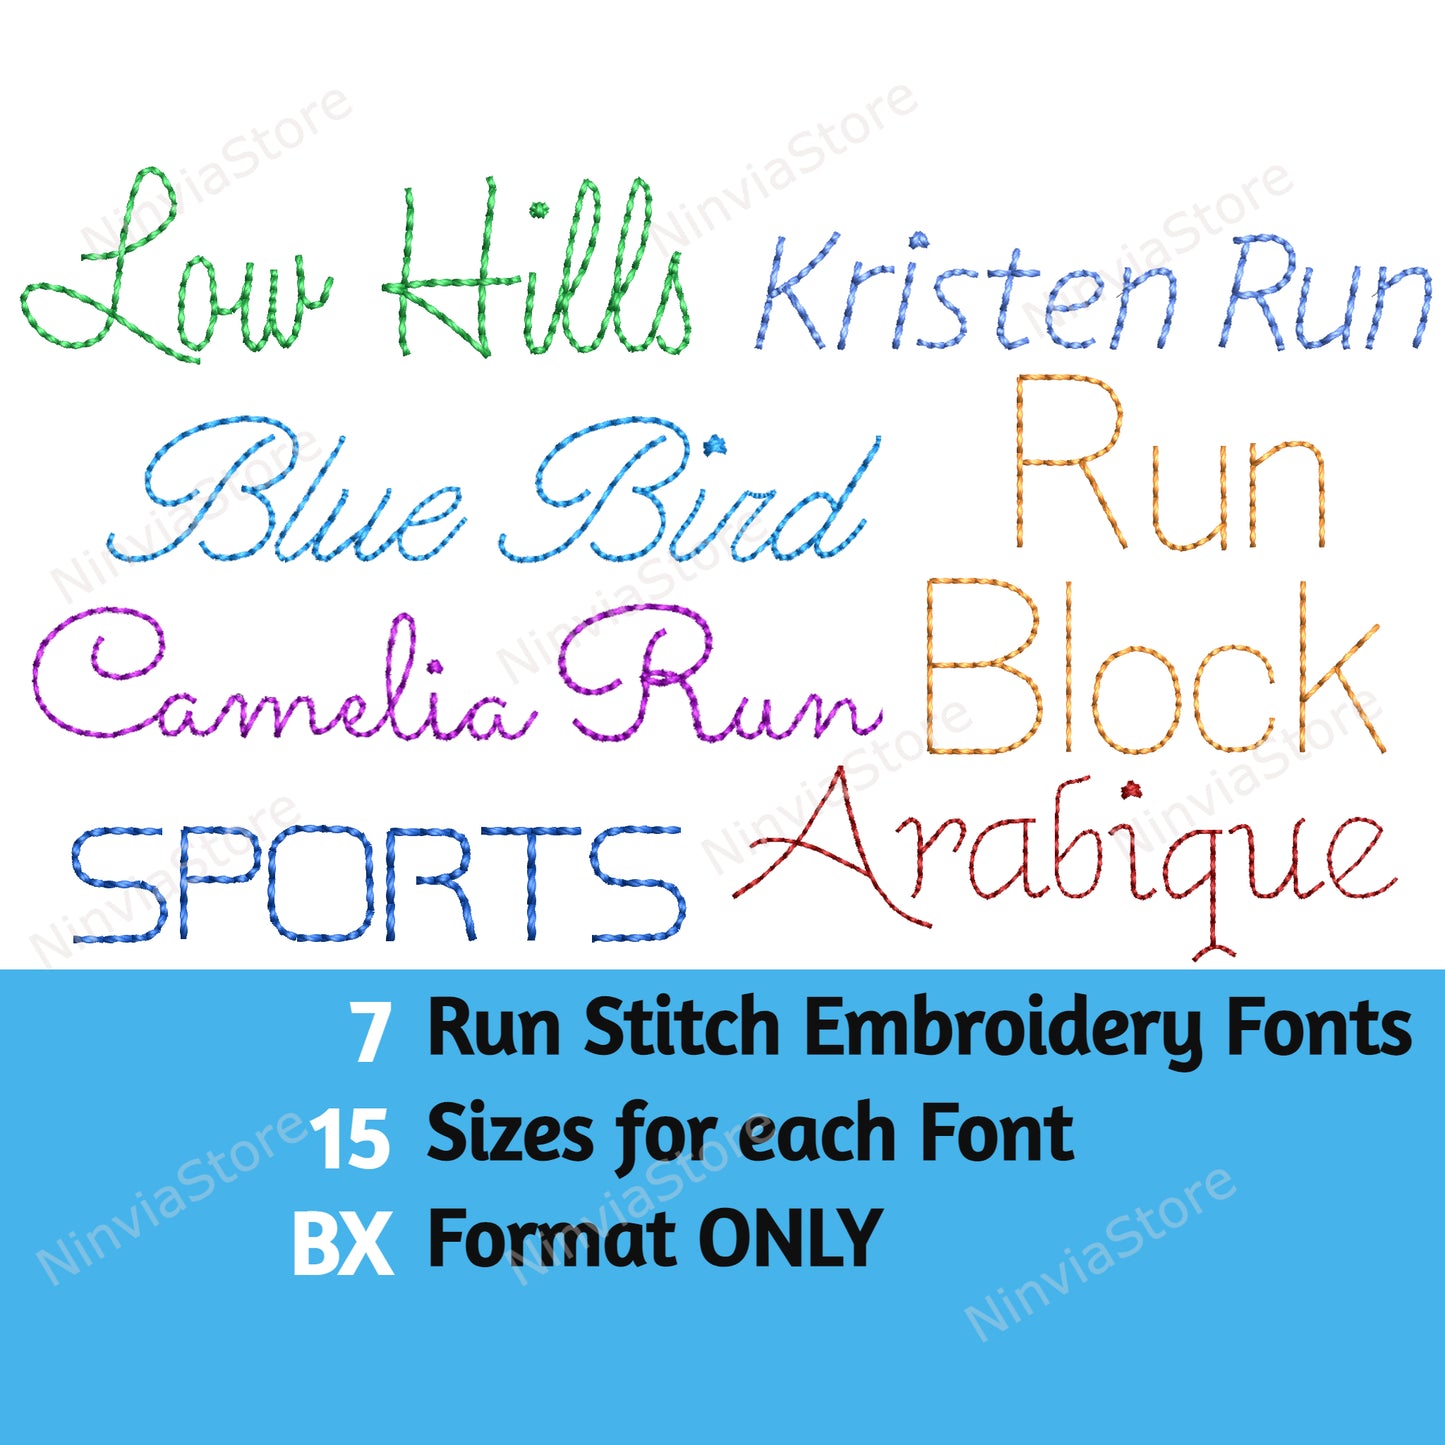 7 BX Bean Stitch Embroidery Fonts Bundle, Run Stitch Machine Embroidery Font BX, Script Cursive BX font for Embroidery